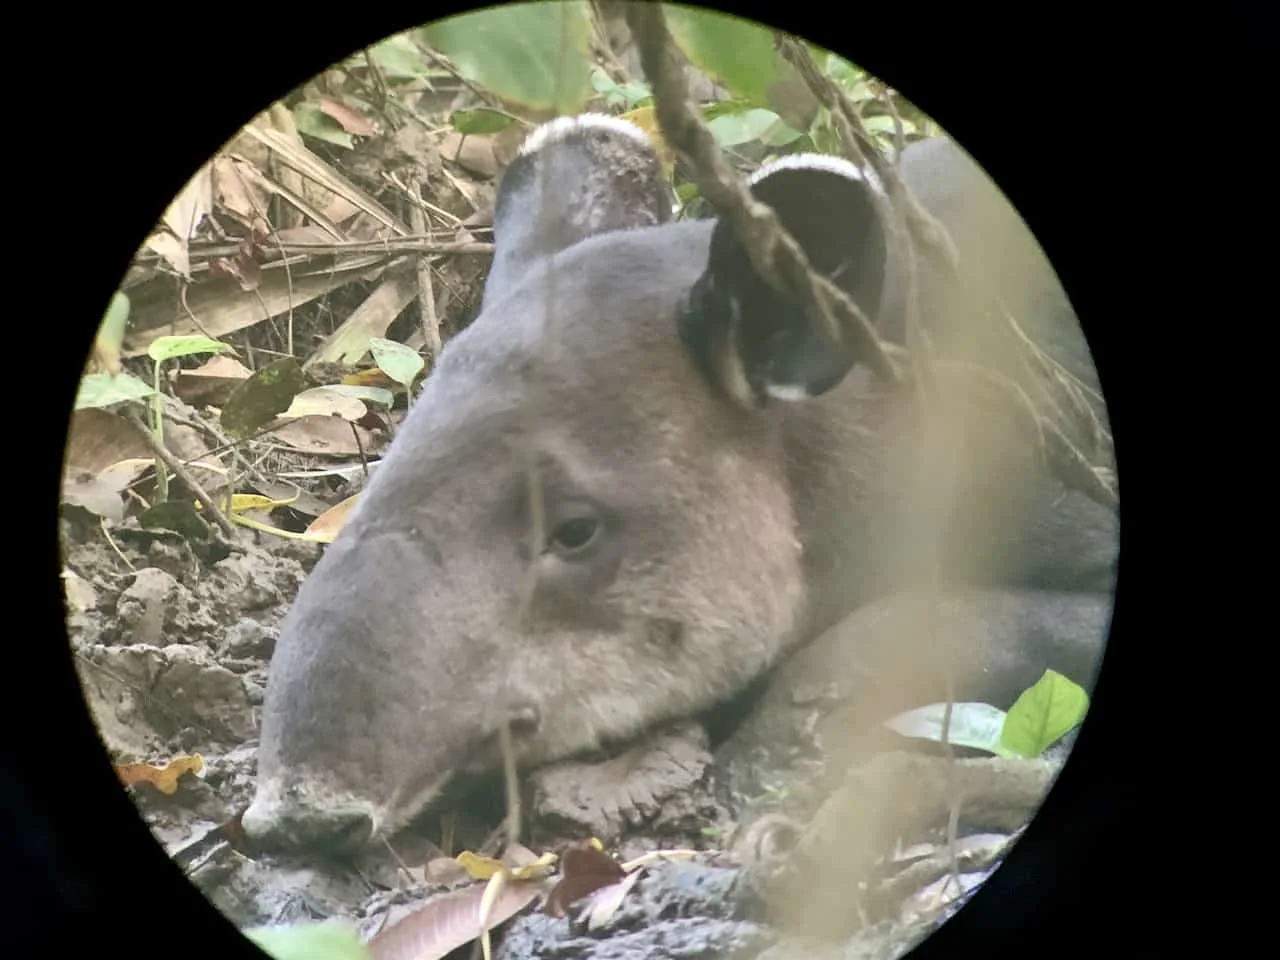 Corcovado Tapir